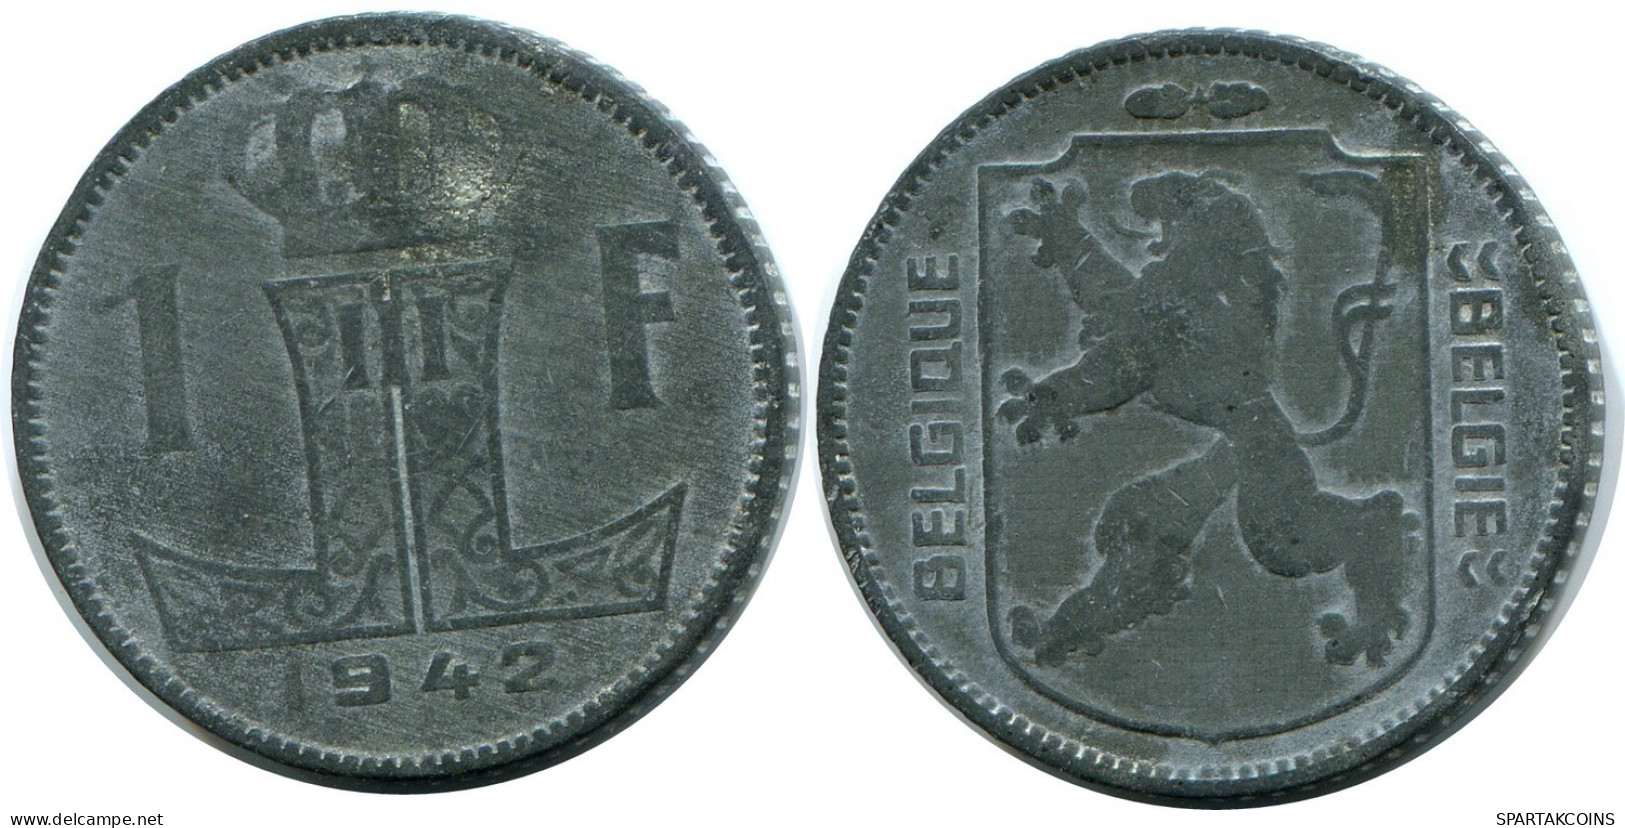 1 FRANC 1942 BELGIQUE-BELGIE BELGIEN BELGIUM Münze #BA708.D.A - 1 Franc